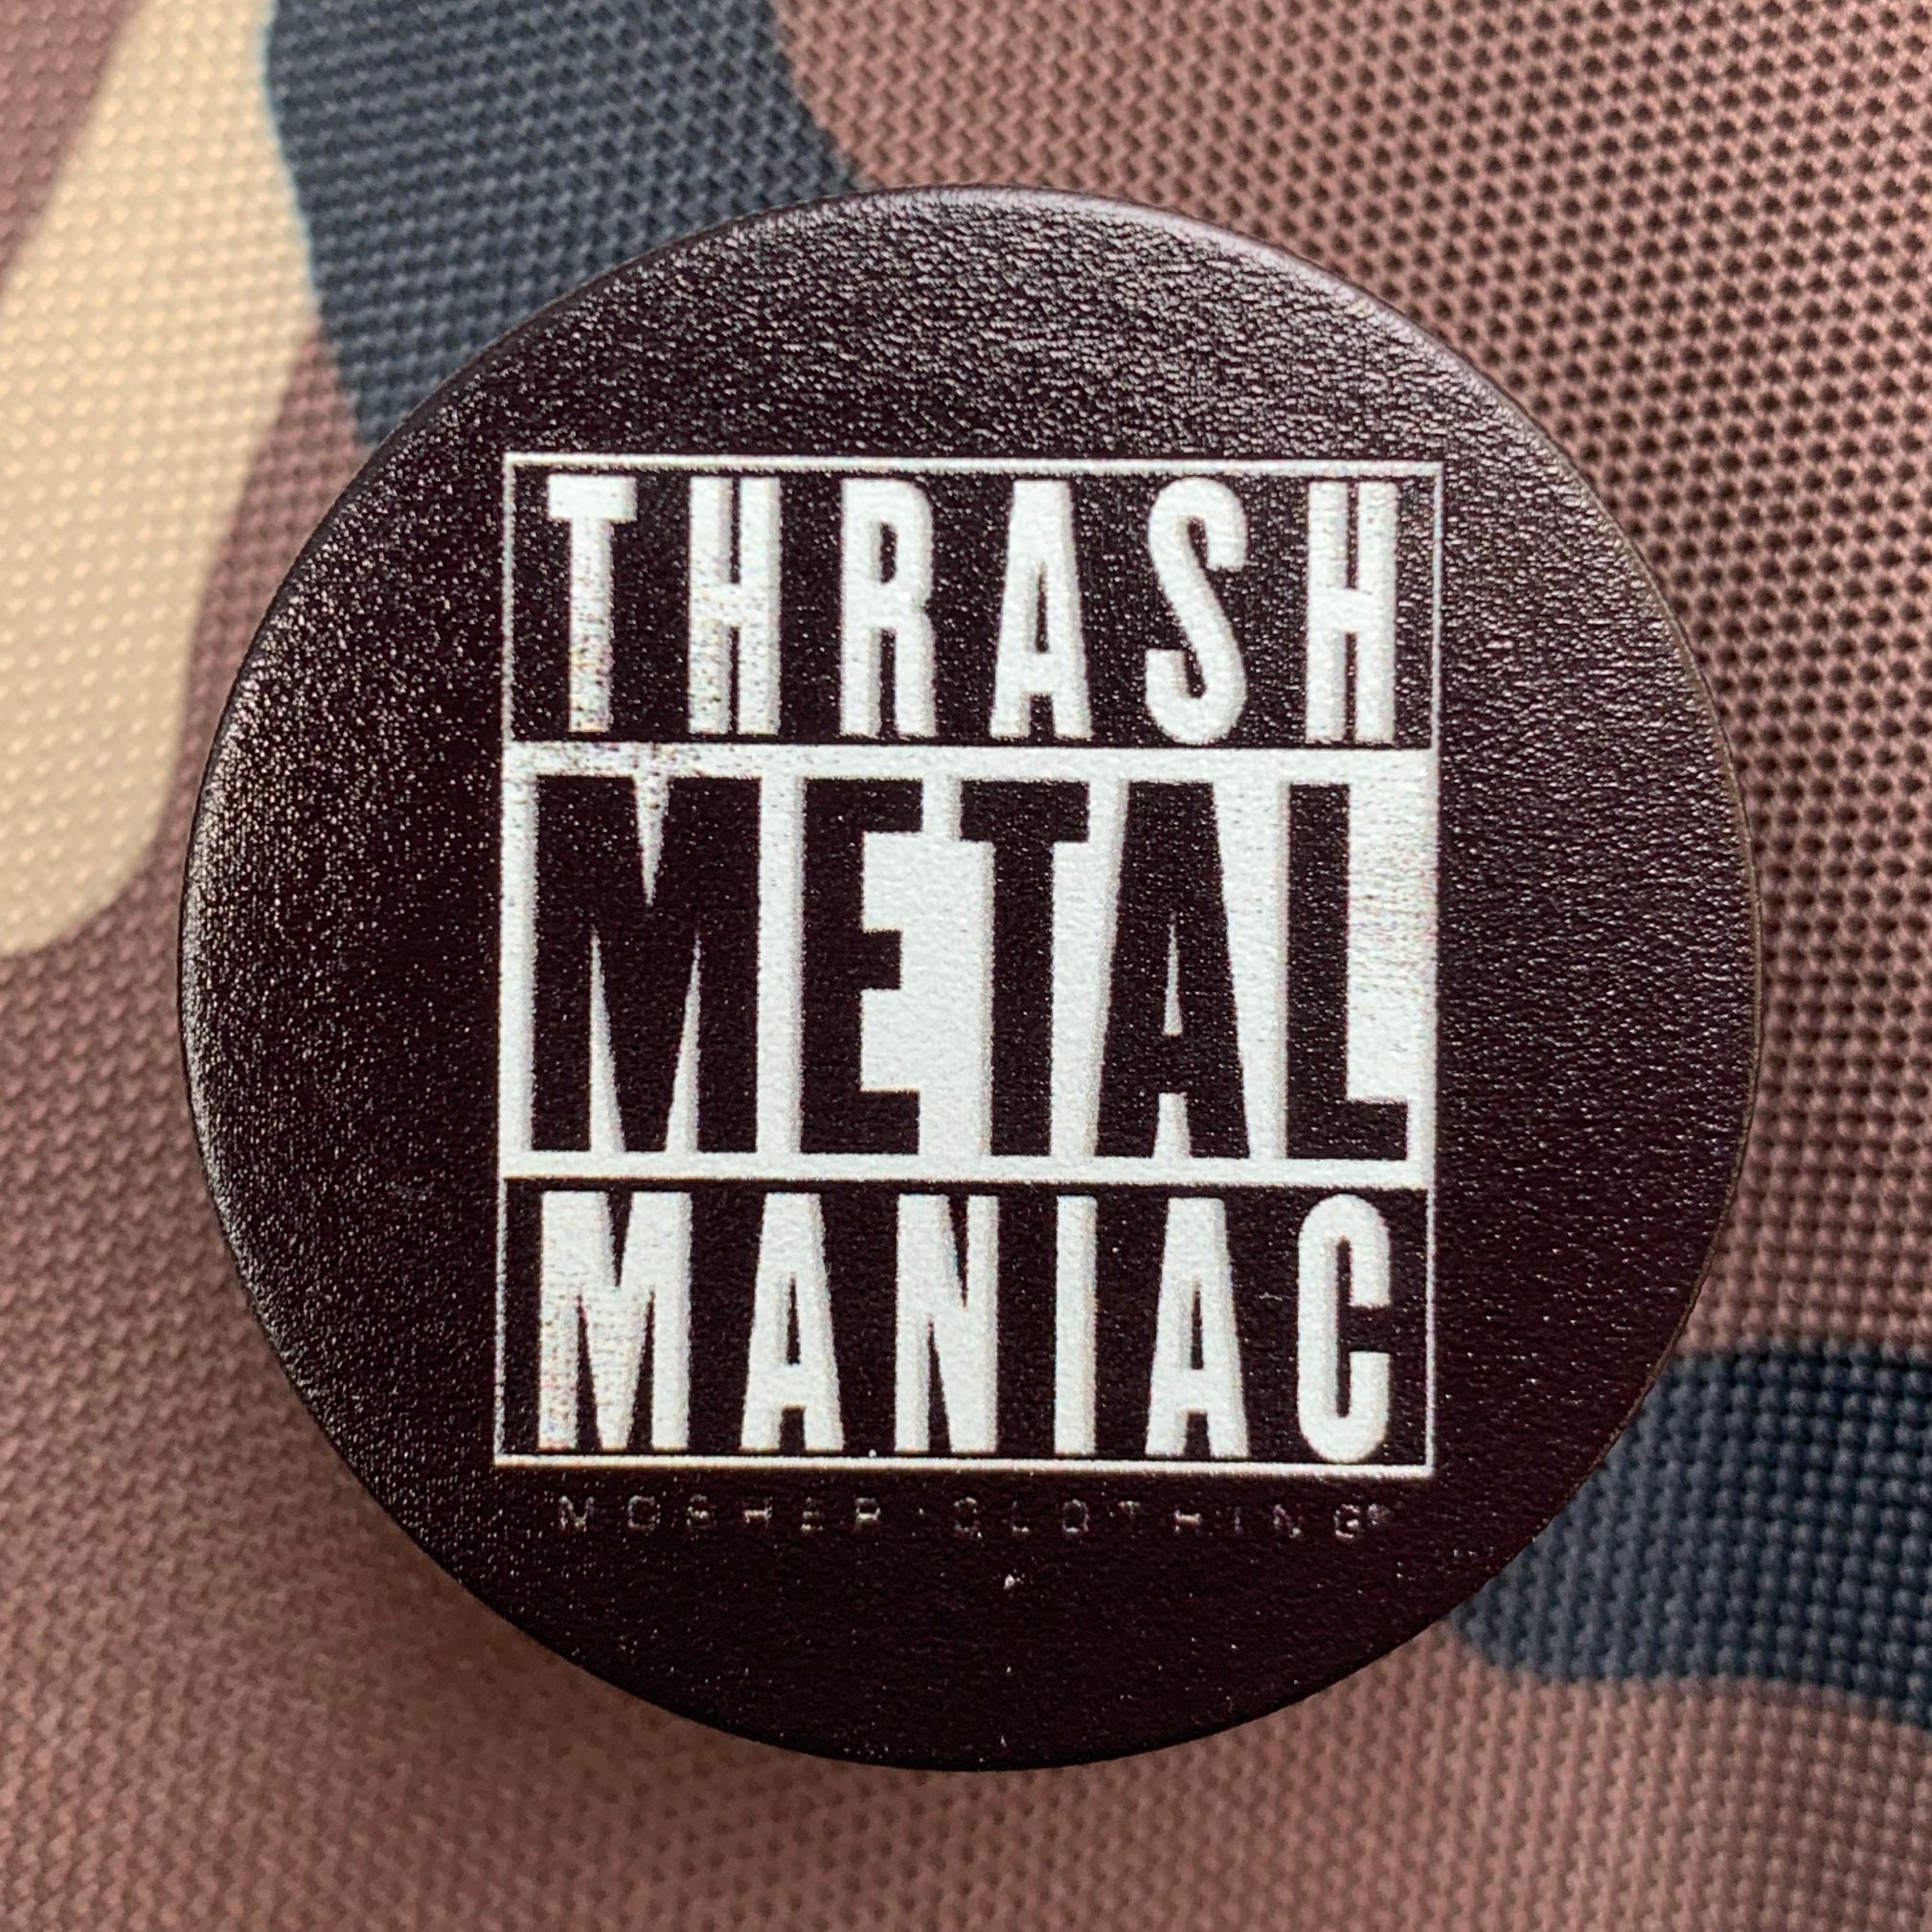 Pop Socket - Thrash Metal Maniac by Mosher Clothing